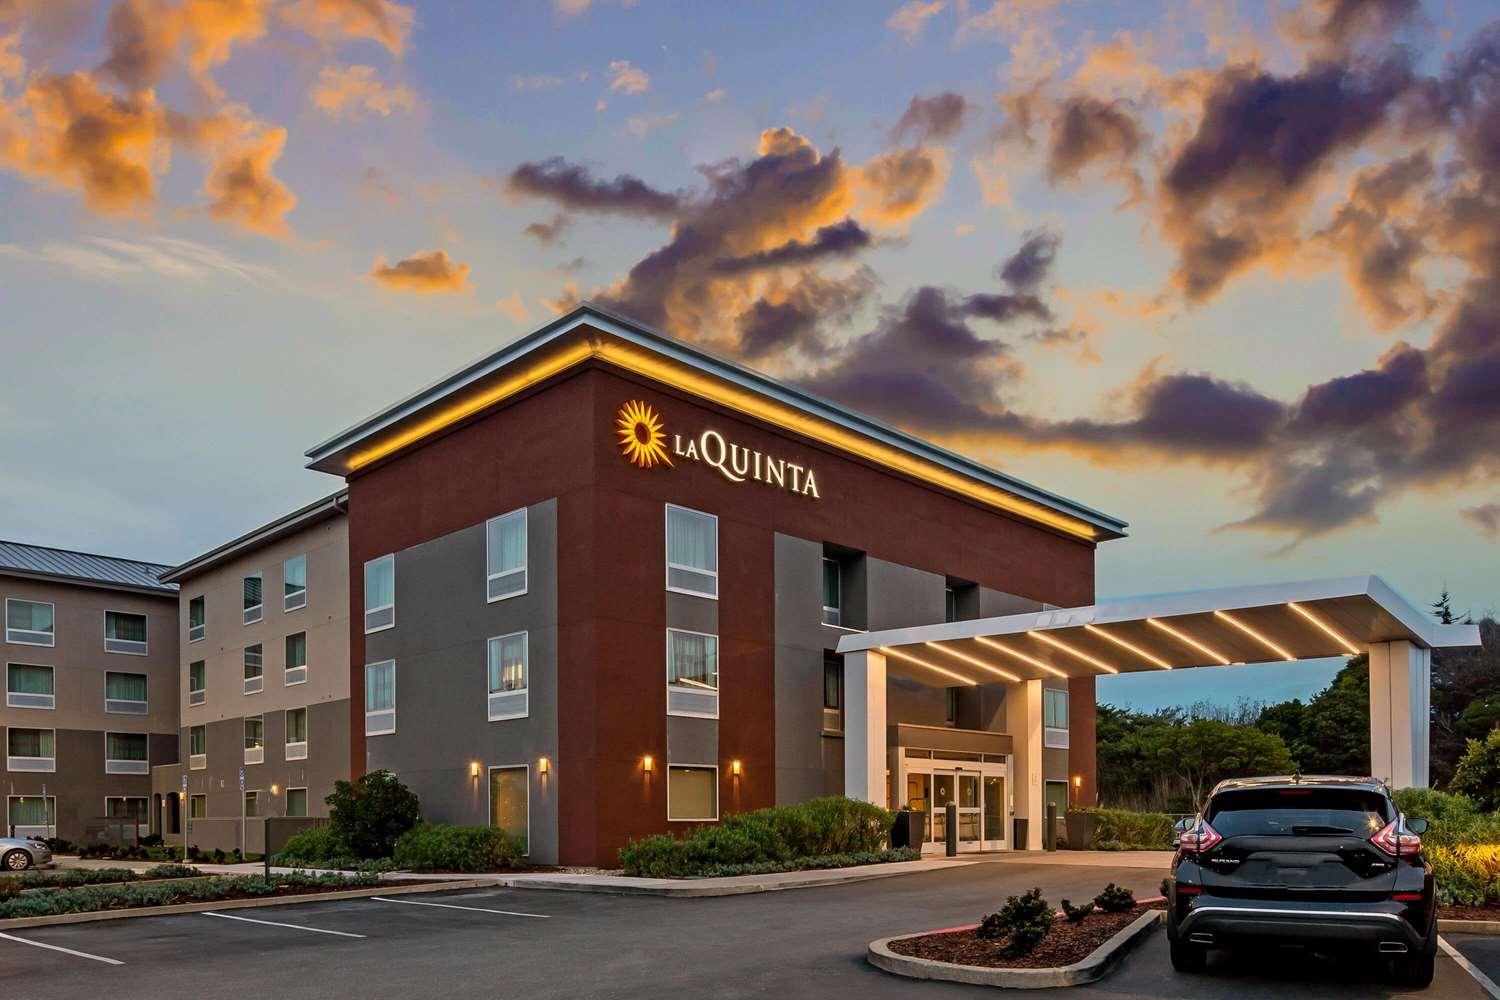 La Quinta Inn & Suites by Wyndham San Francisco Airport N in South San Francisco, CA